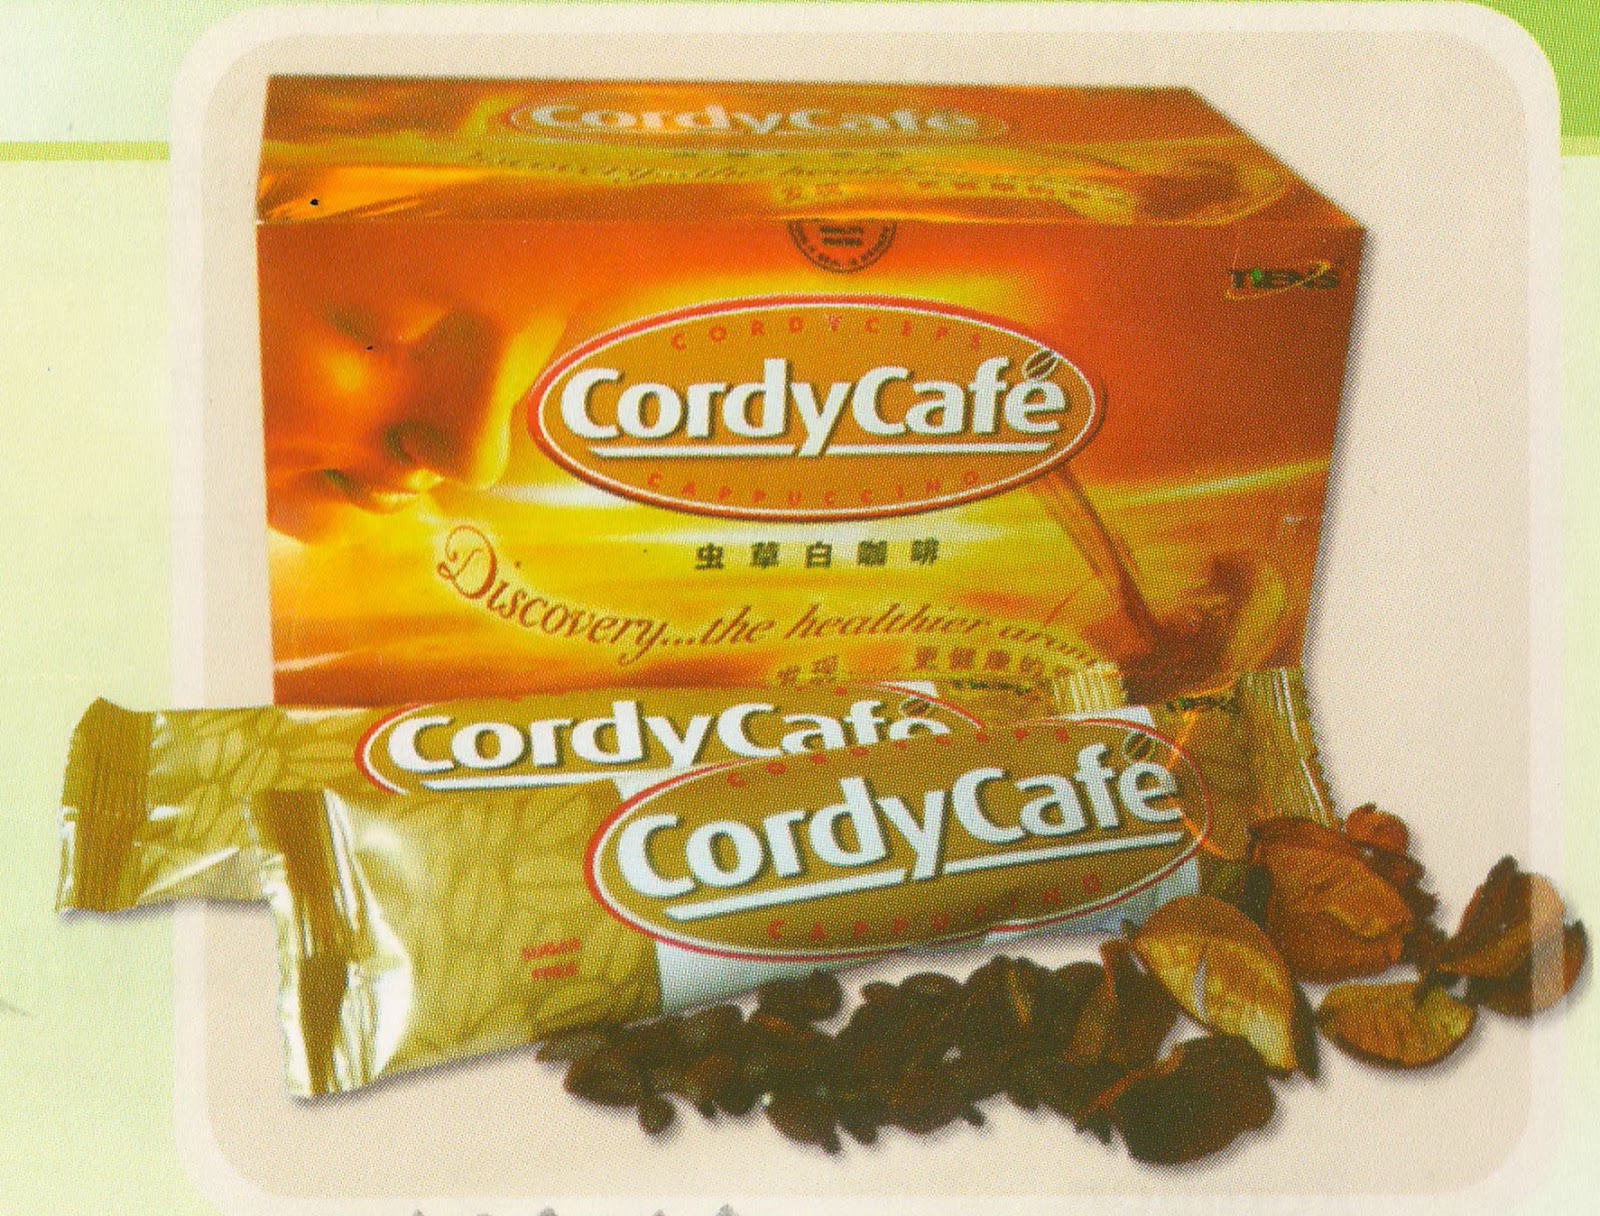 cafea-cu-cordyceps-cordy-cafe